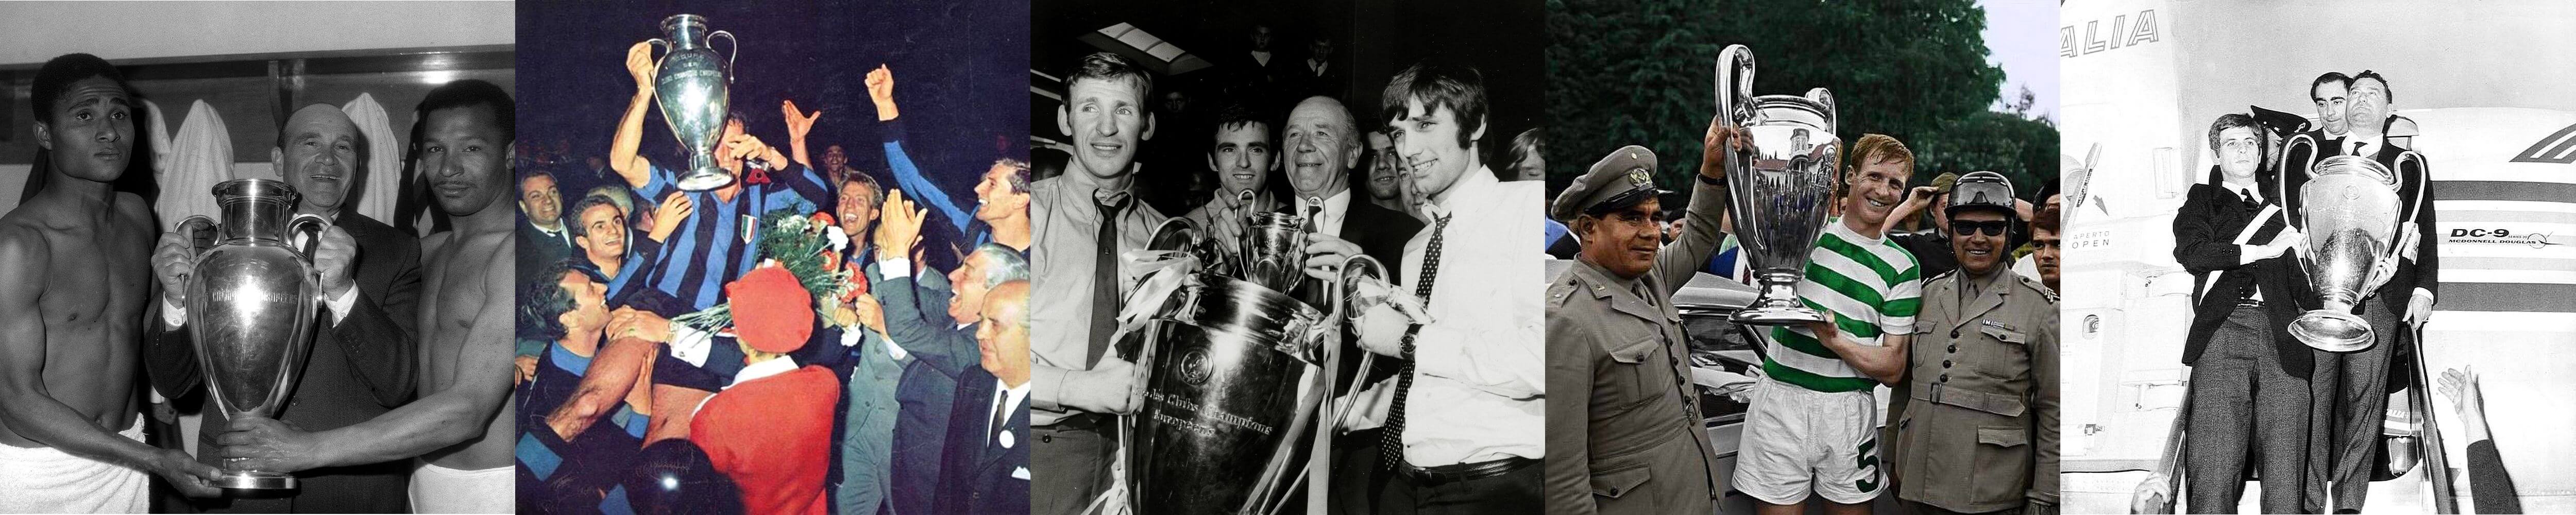 Champions League winners 1960s